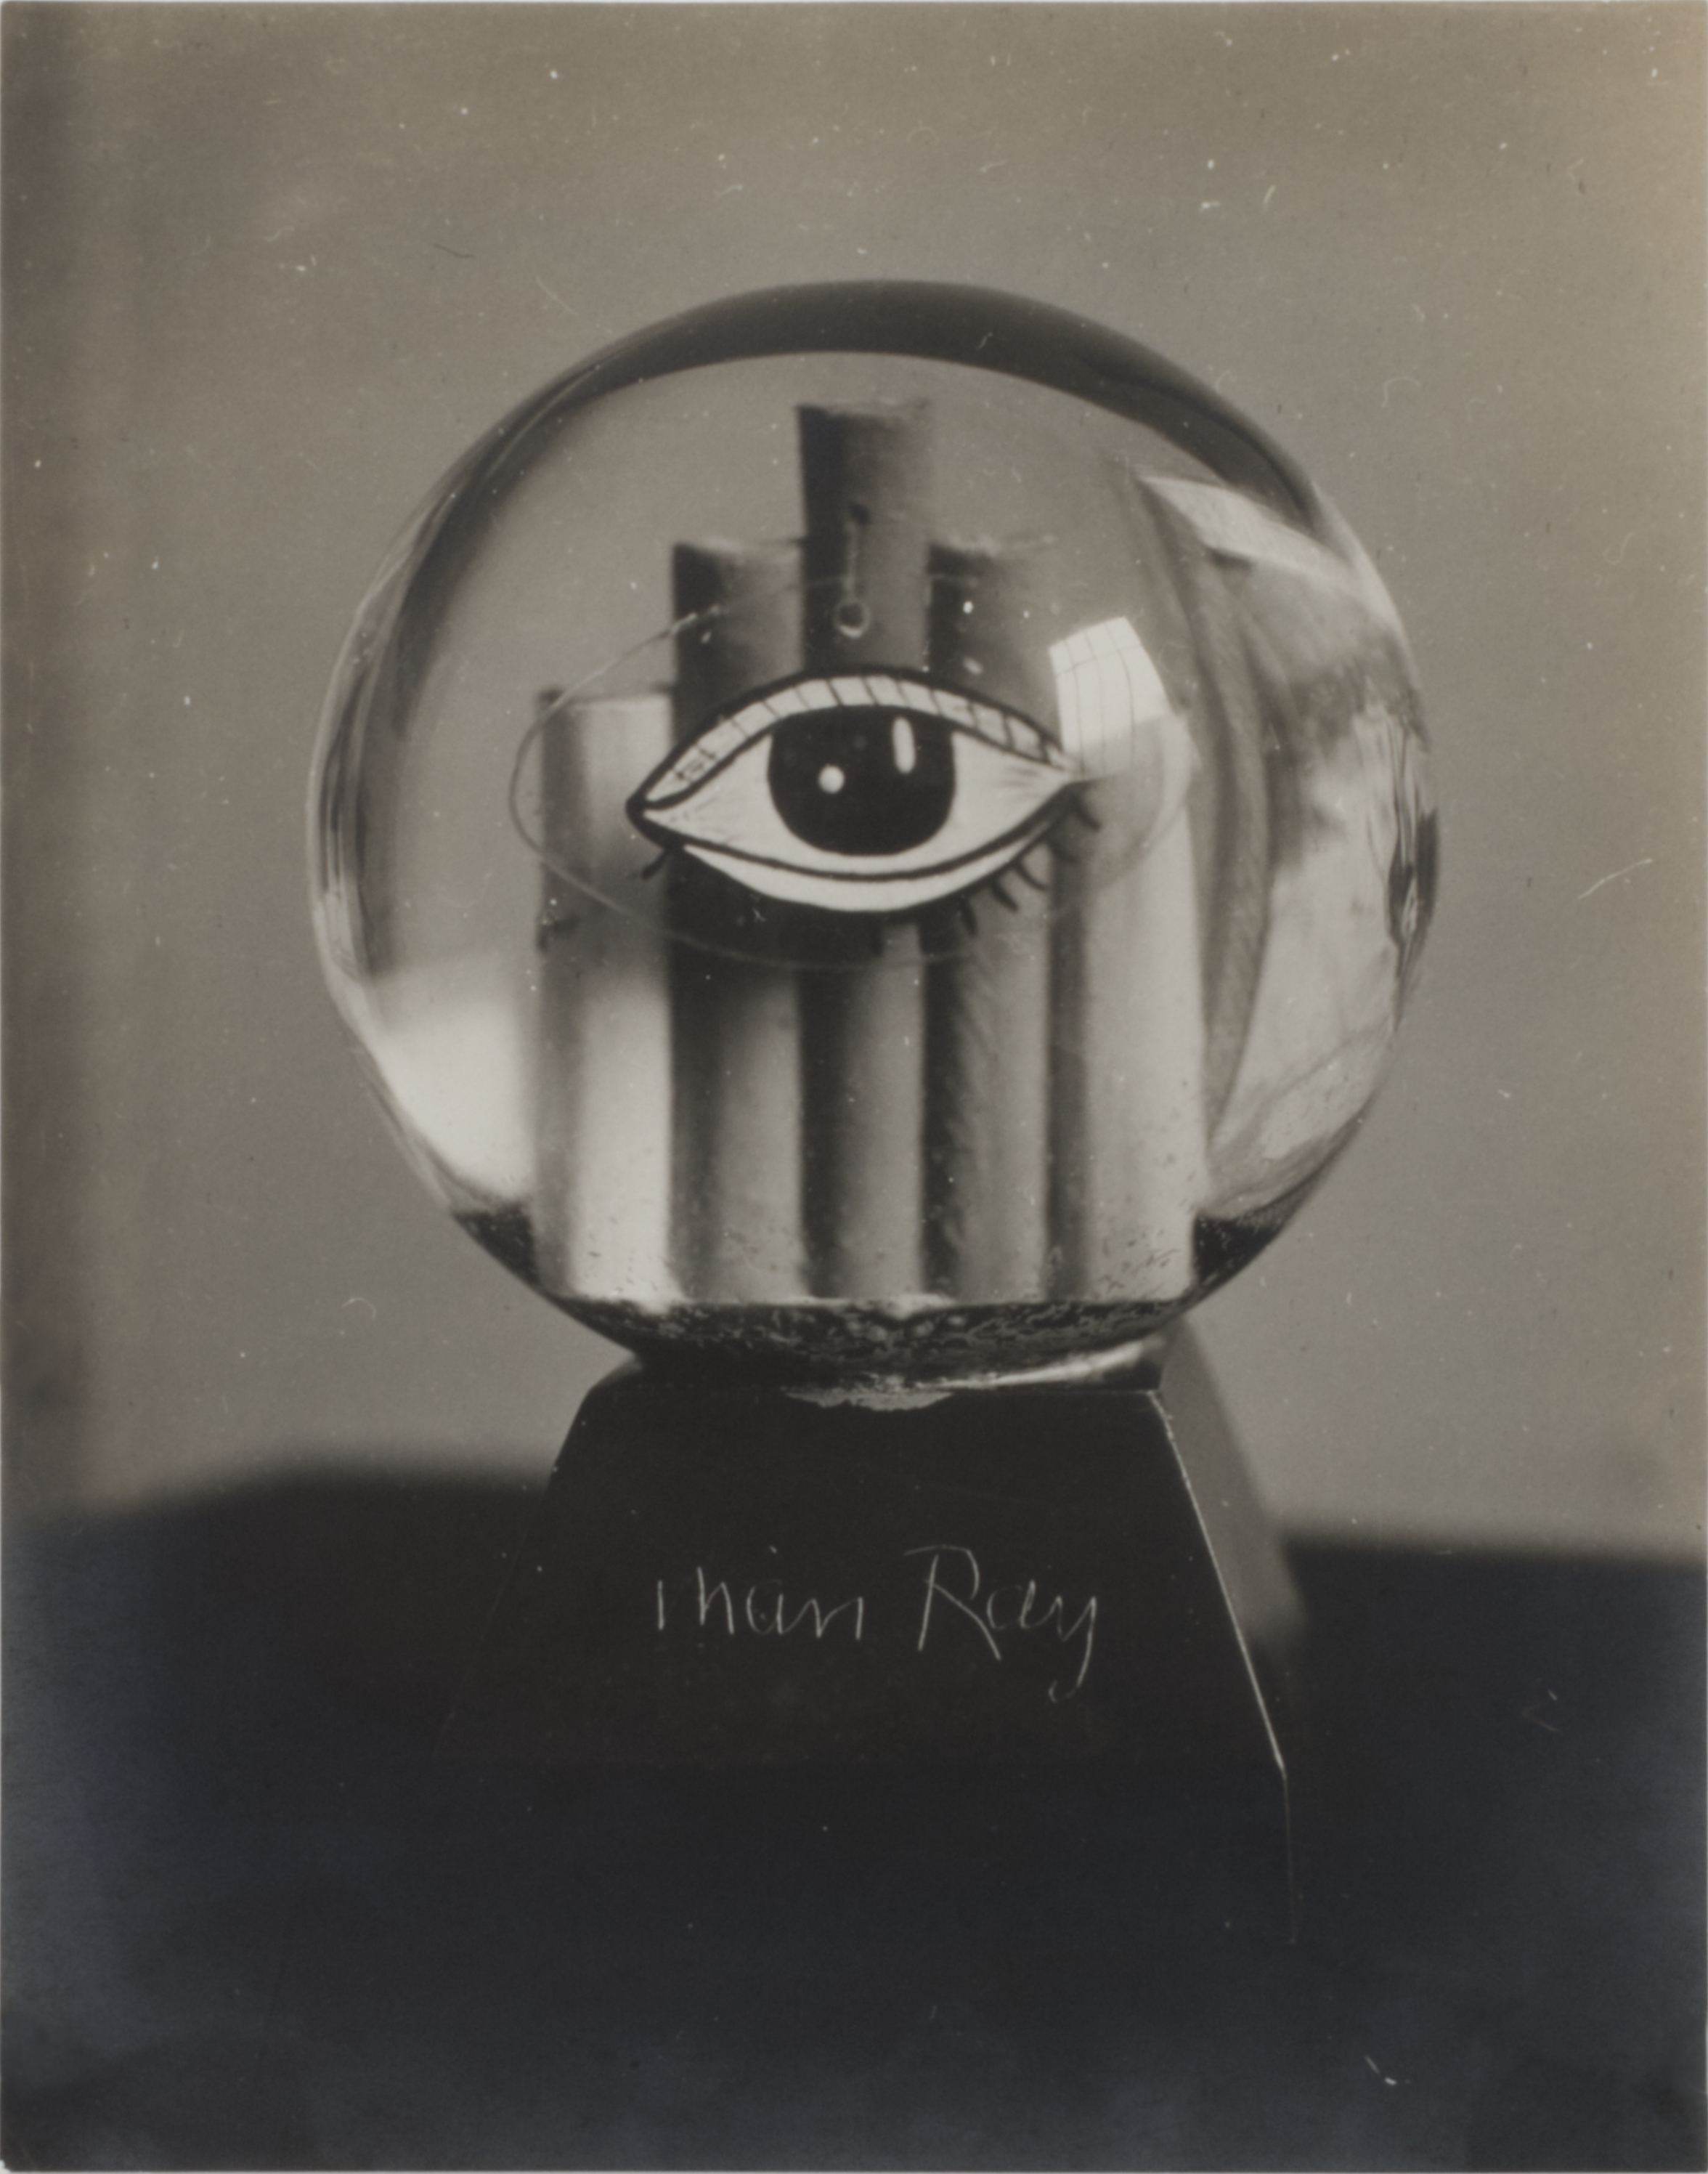 Man Ray, Boule de Niege, 1926.